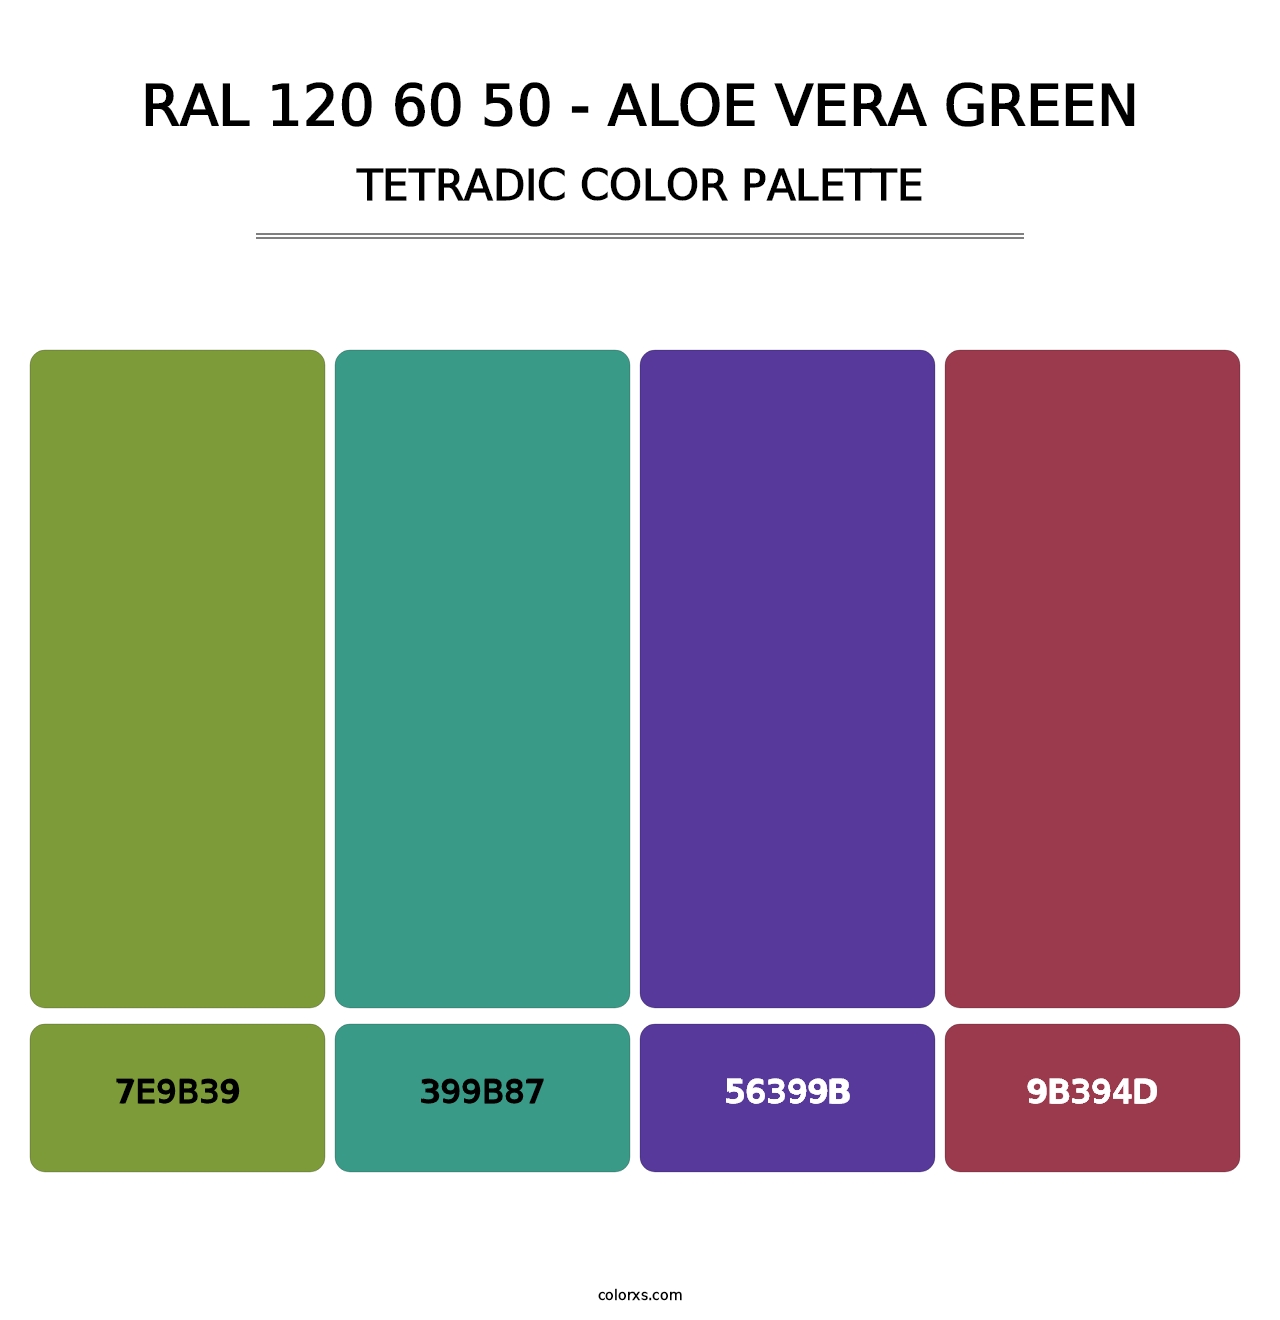 RAL 120 60 50 - Aloe Vera Green - Tetradic Color Palette